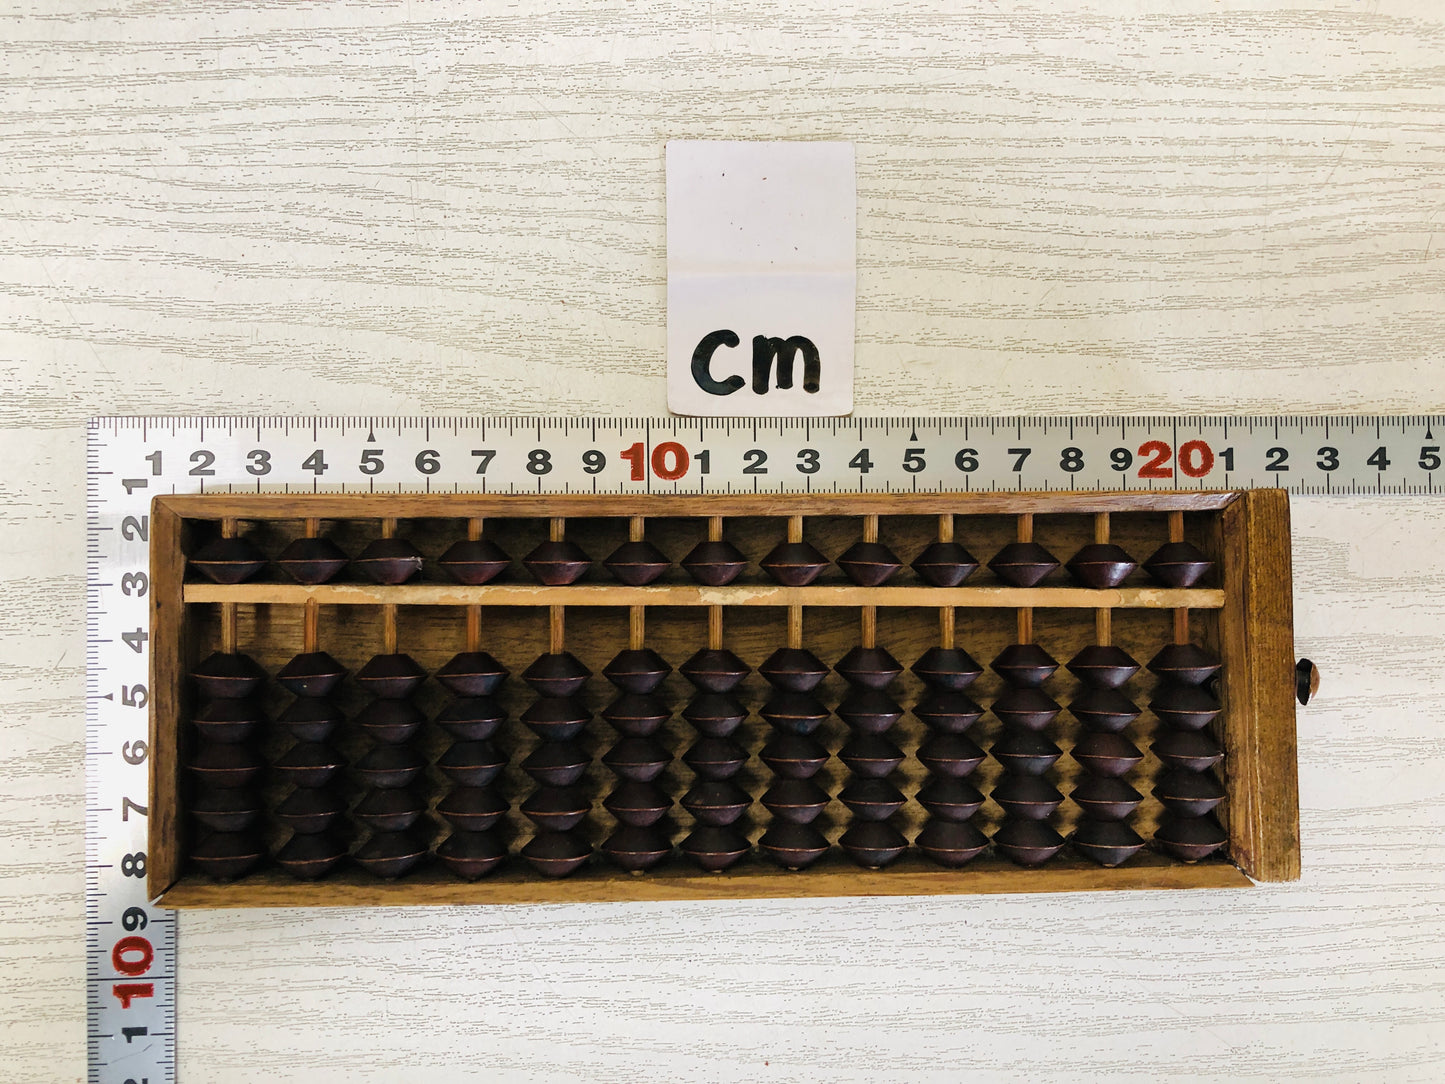 Y3671 TANSU Tamamoku Zelkova Suzuri box abacus Japanese antique vintage storage